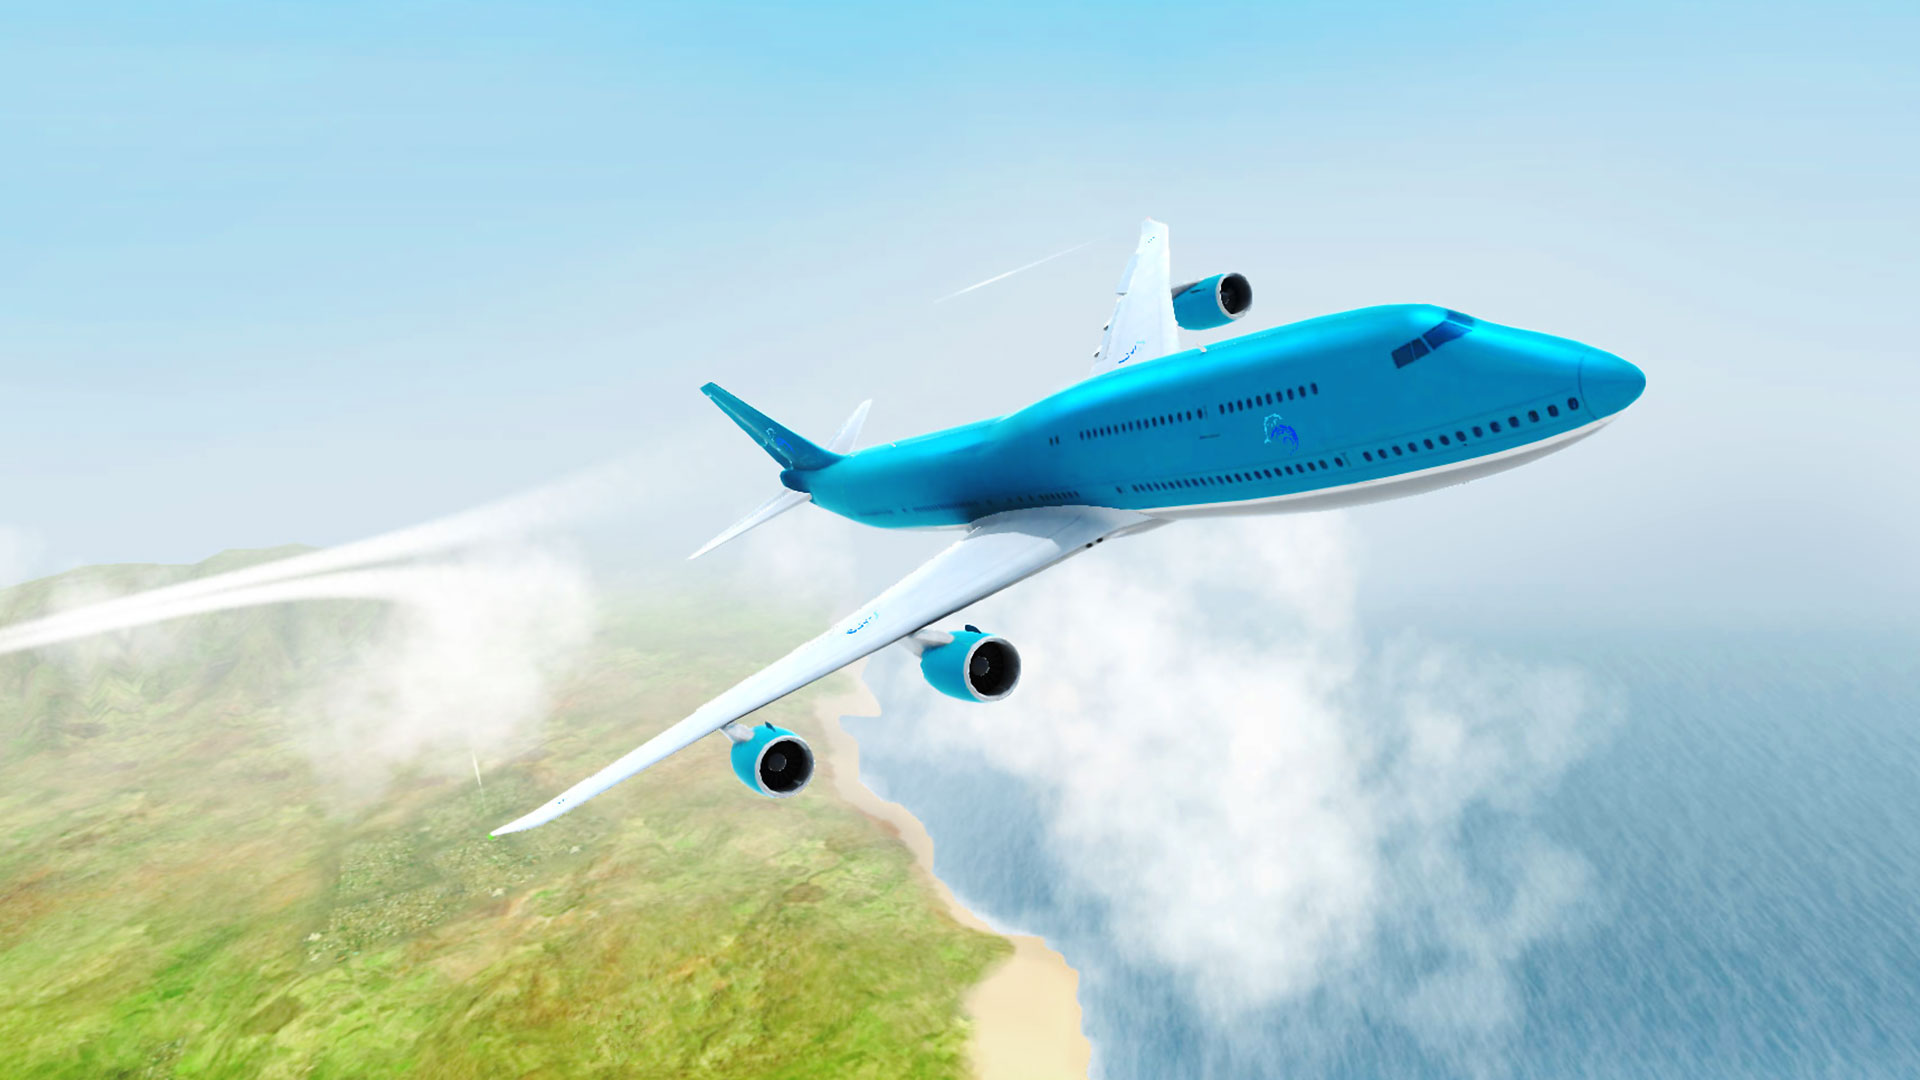 Take Off - The Flight Simulator EU Steam CD Key